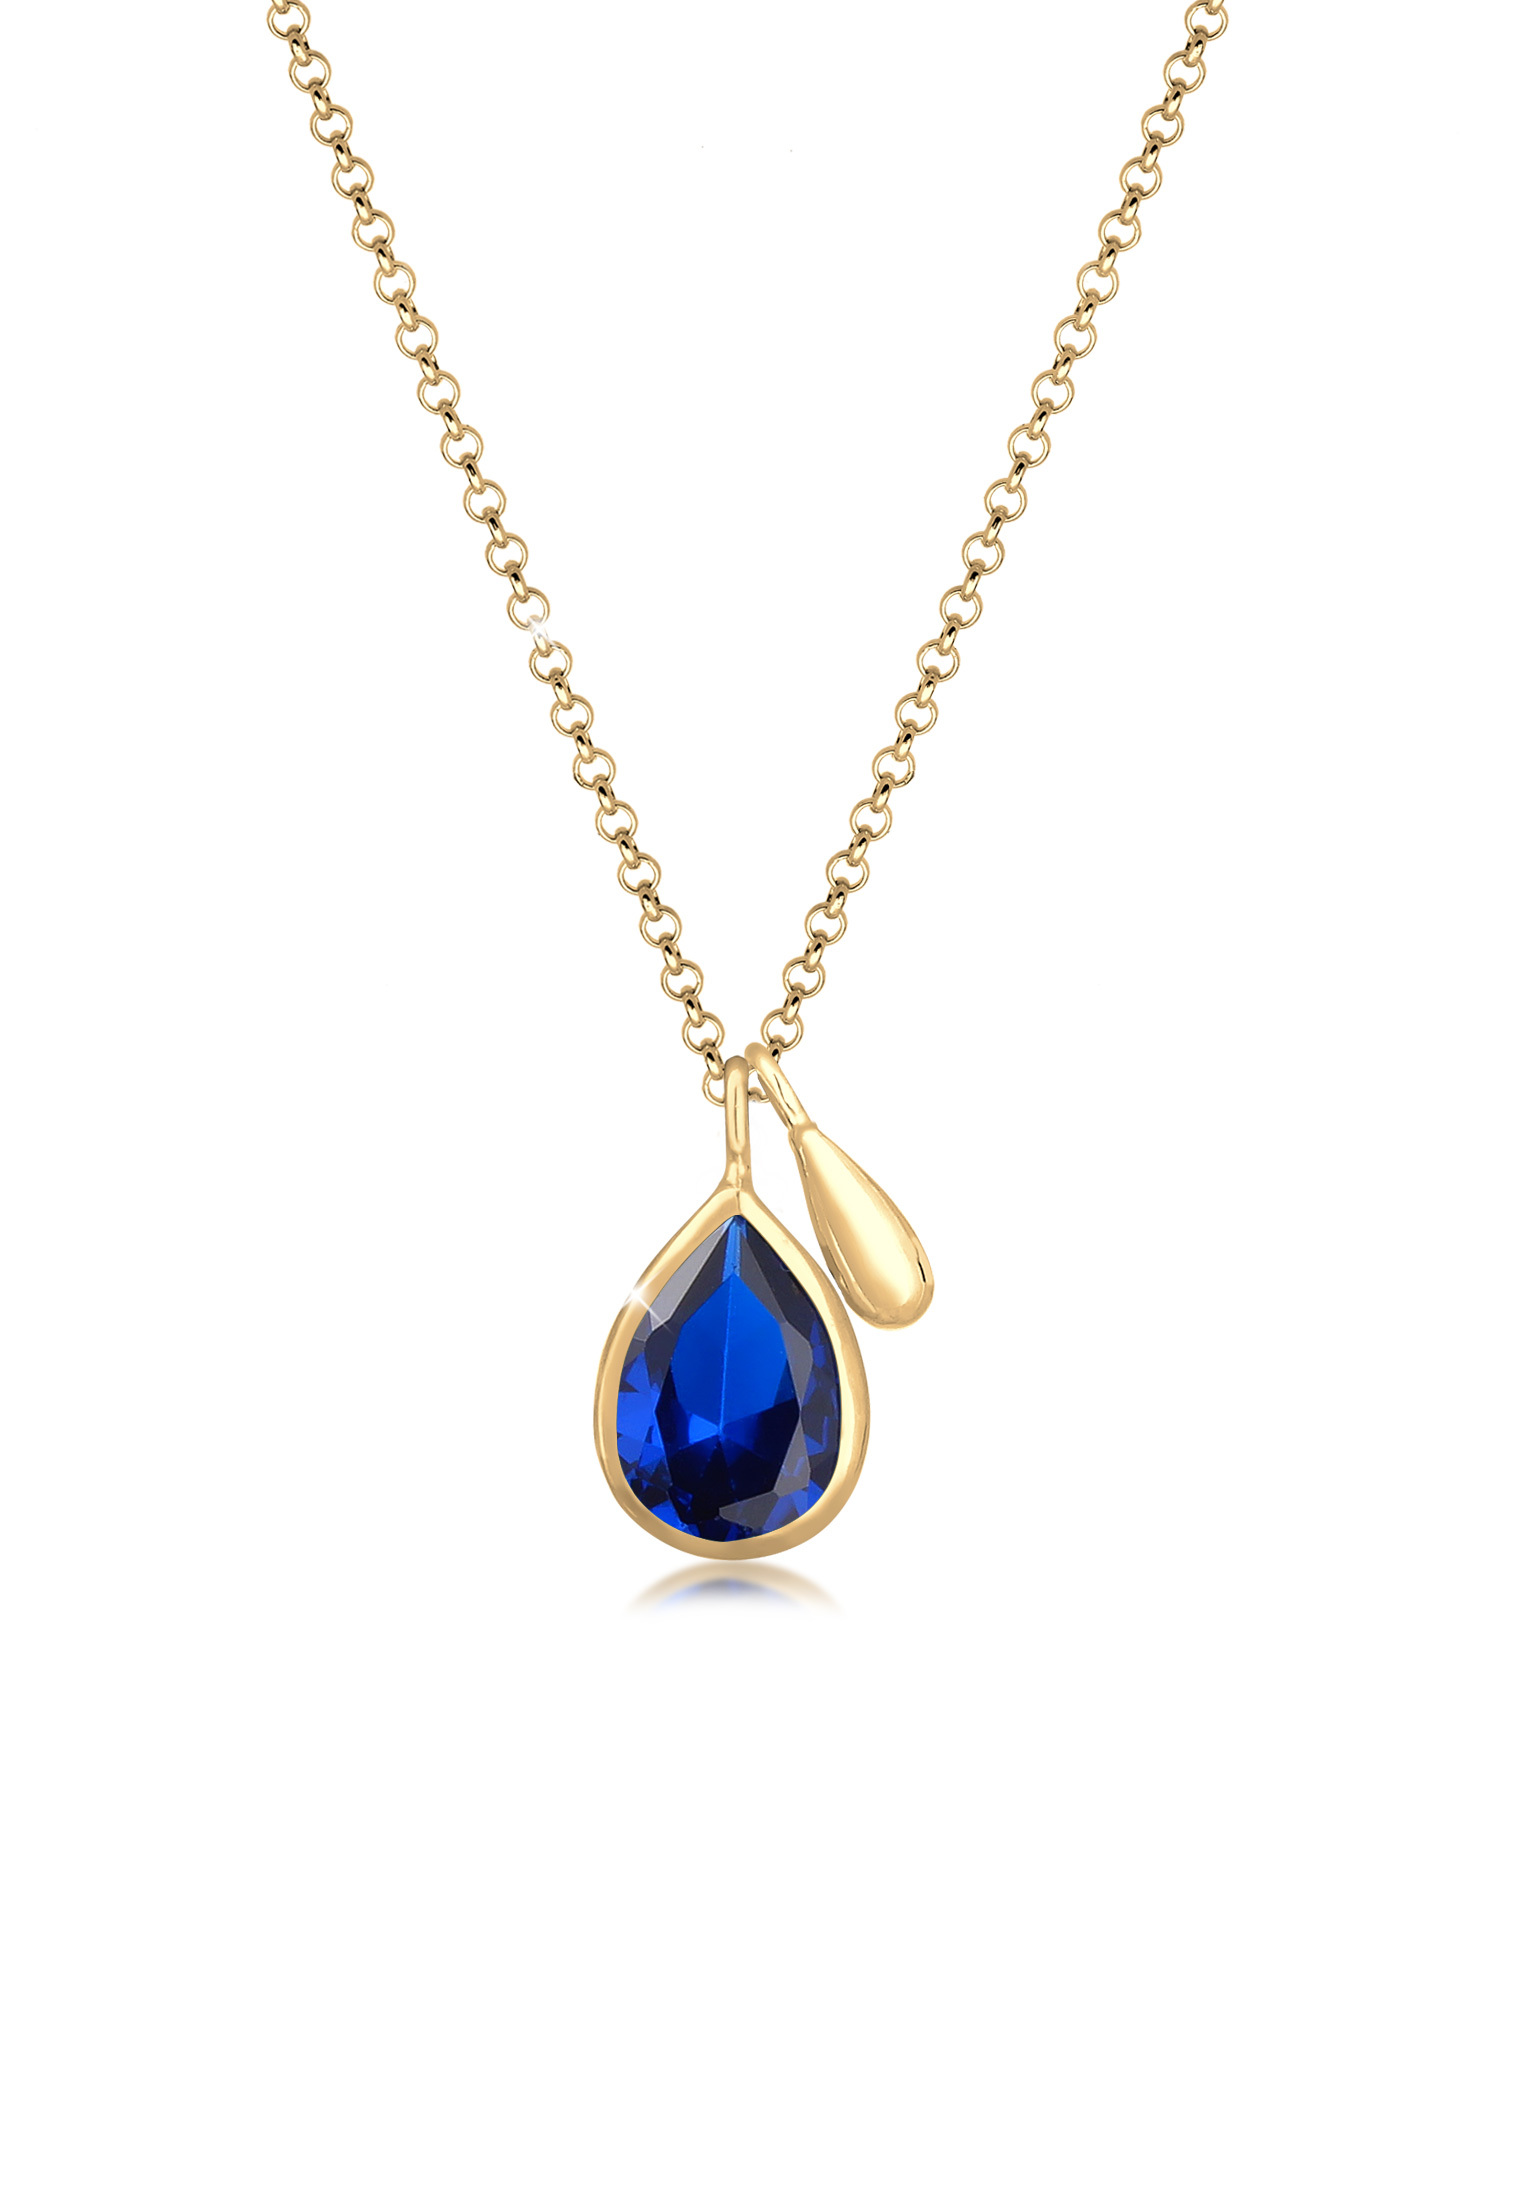 Halskette | Saphir ( Blau ) | 925 Sterling Silber vergoldet